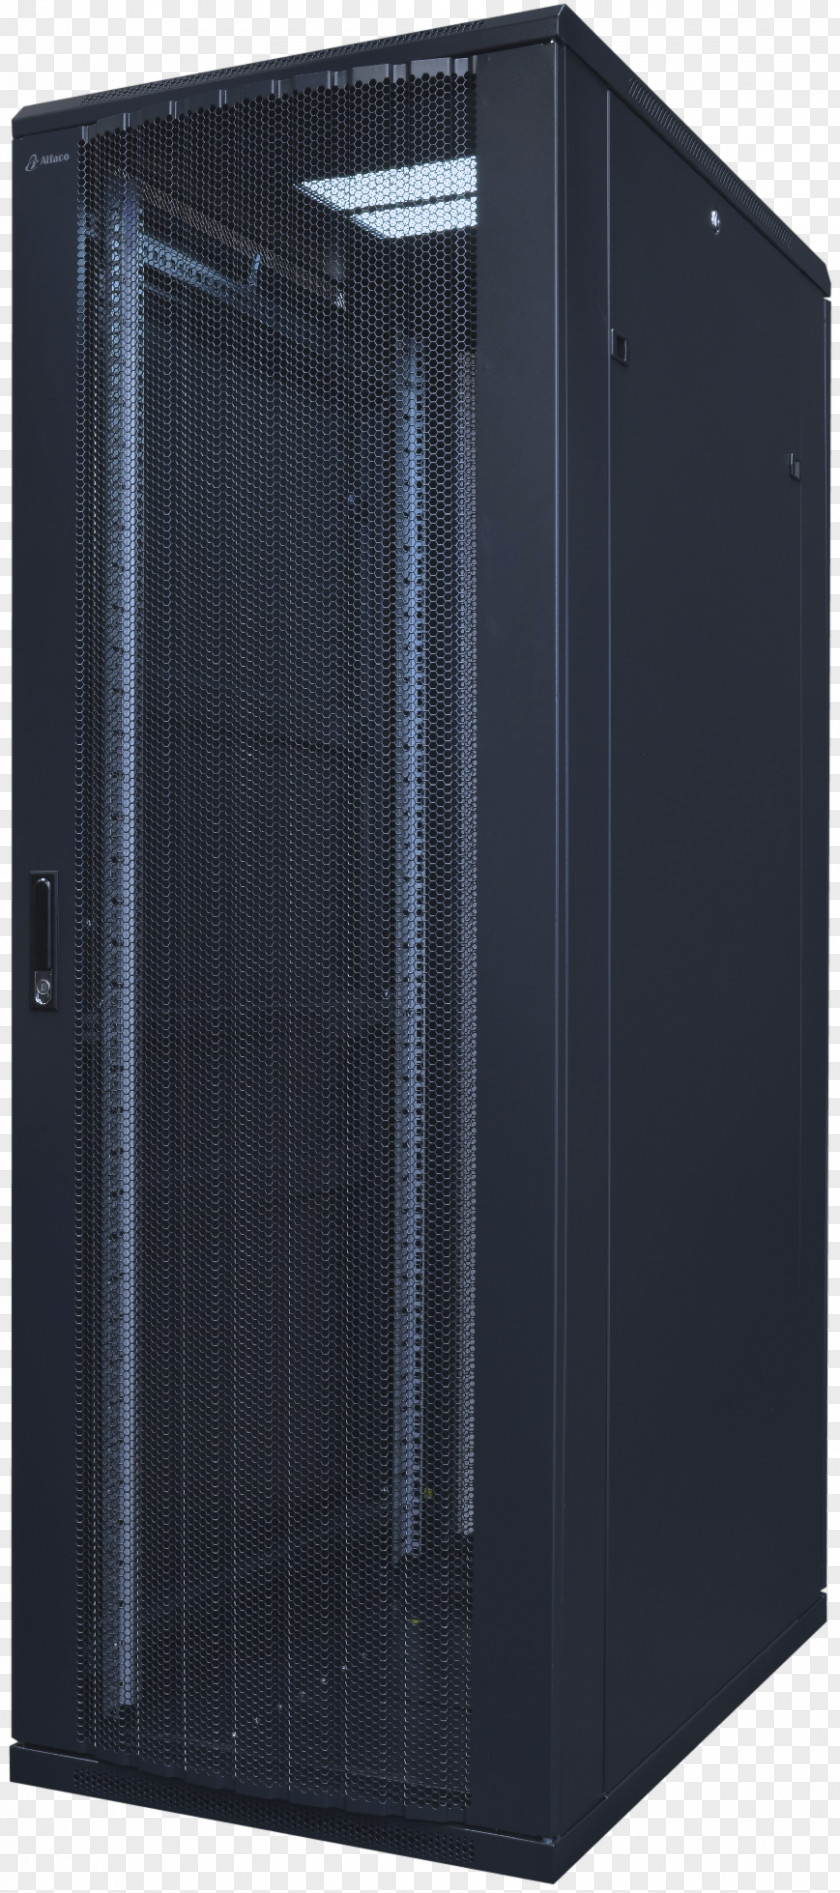 Computer Cases & Housings Servers 19-inch Rack Data Center Unit PNG